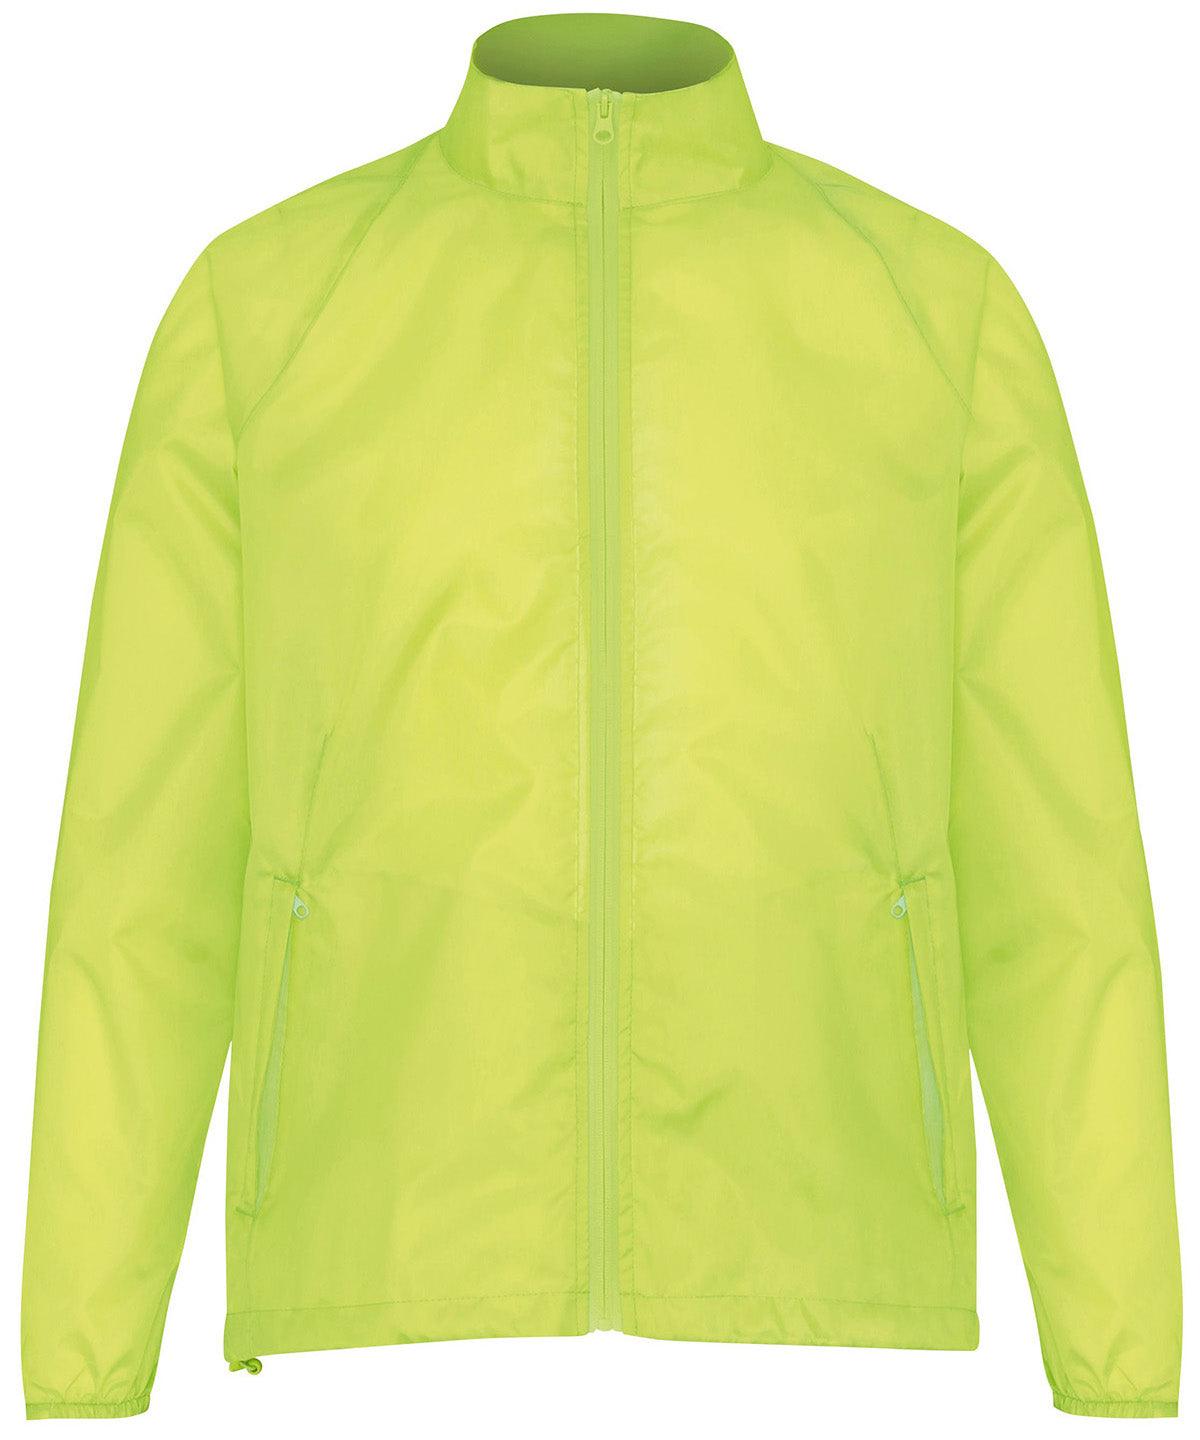 Kelly - Lightweight jacket Jackets 2786 Alfresco Dining, Jackets & Coats, Lightweight layers, Rebrandable Schoolwear Centres